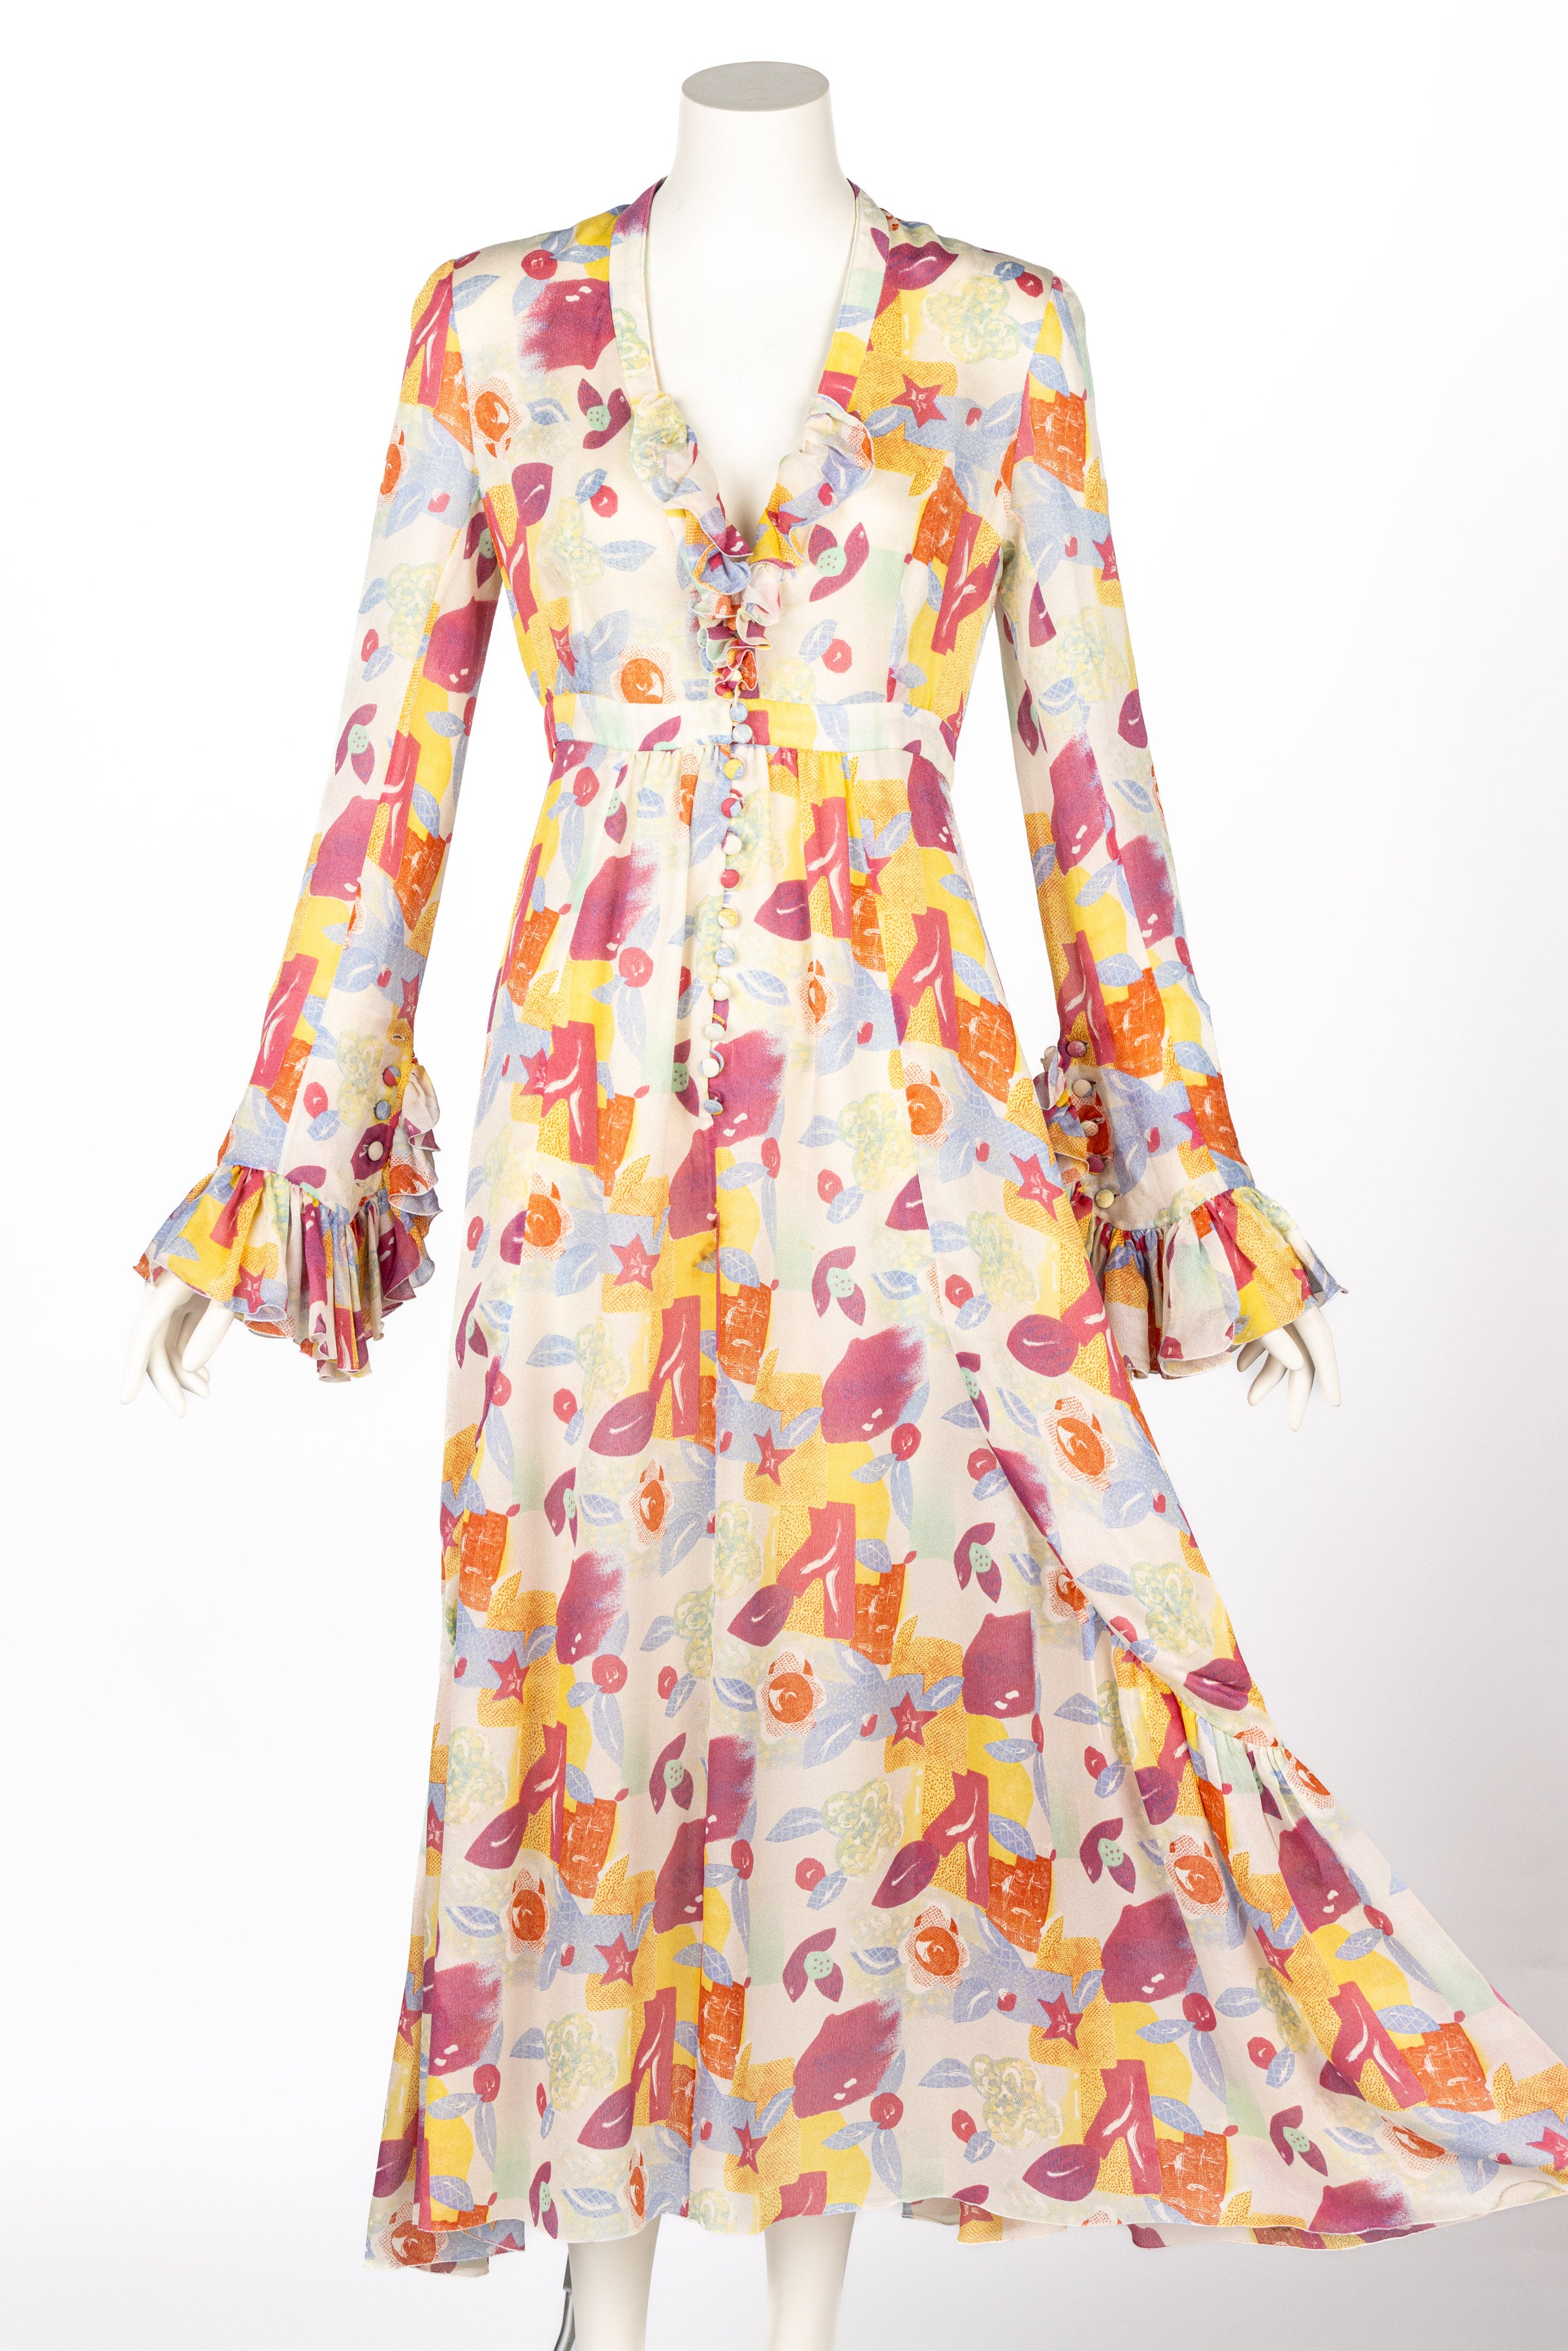 Women's Chloe Karl Lagerfeld Floral Printed Silk Dress S/S 1993 Vogue Documented